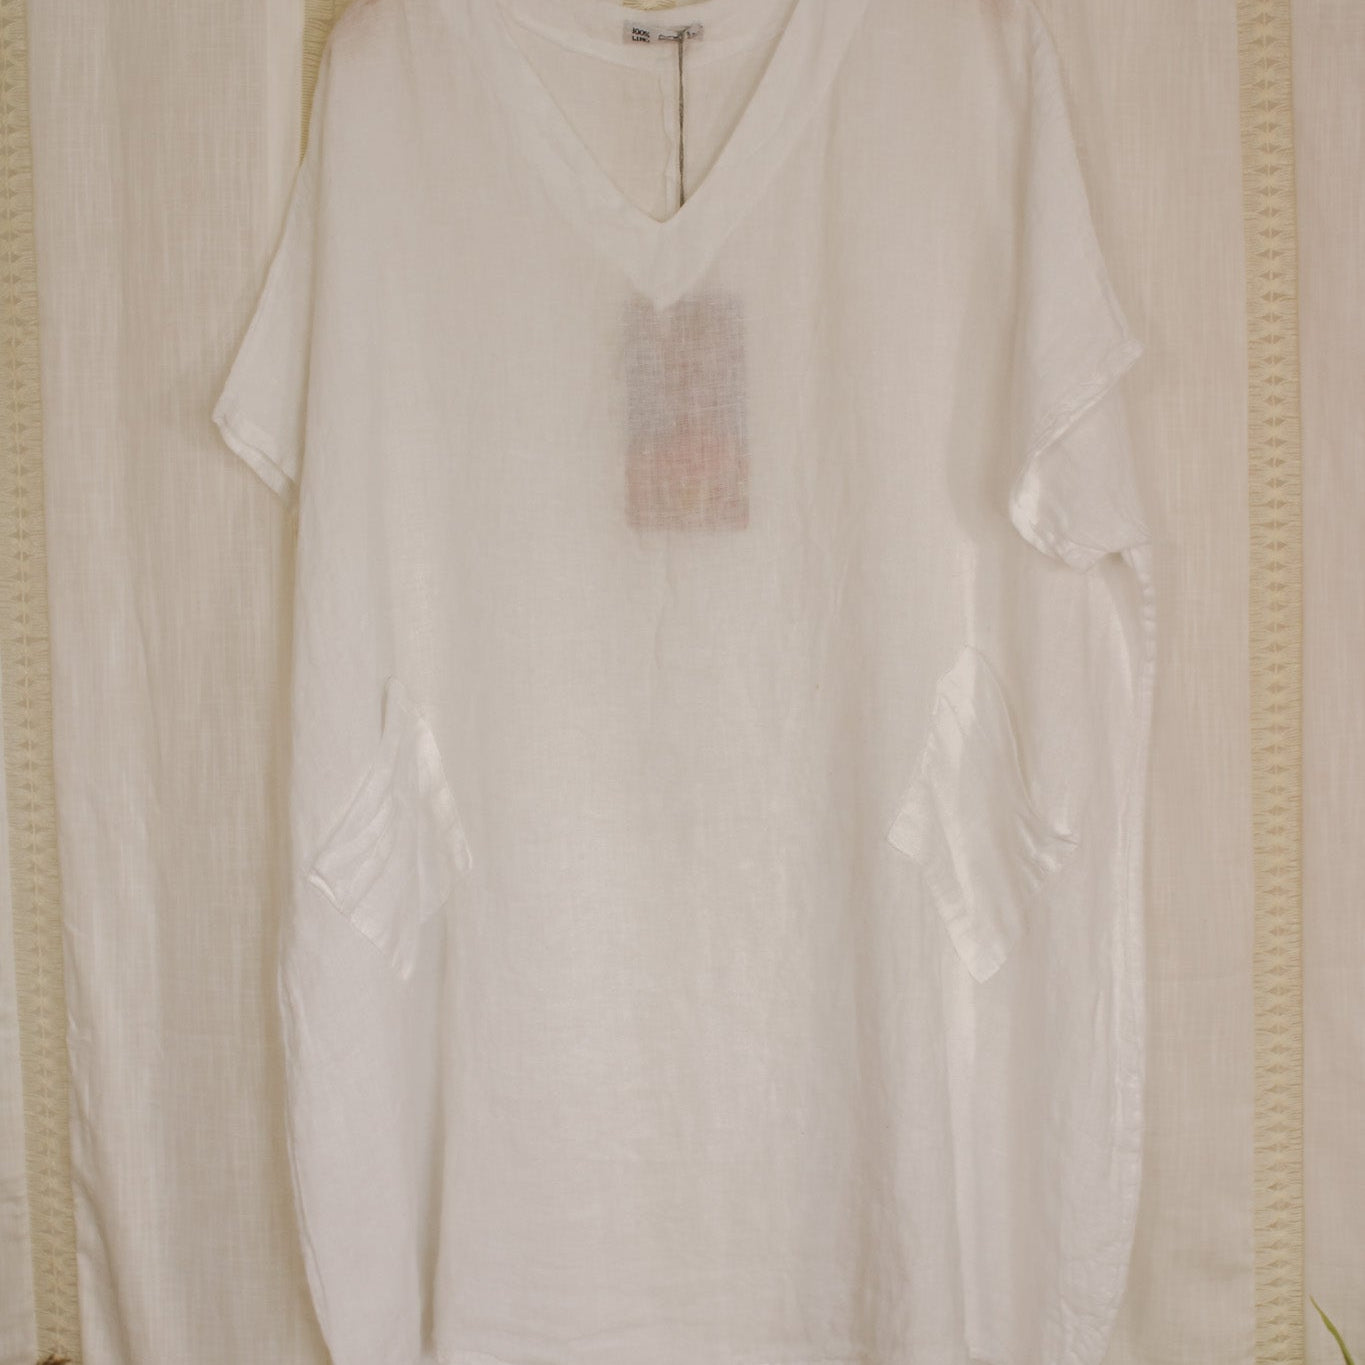 Linen T-Shirt Dress with Front Pockets - 4 ColorsColetteDress